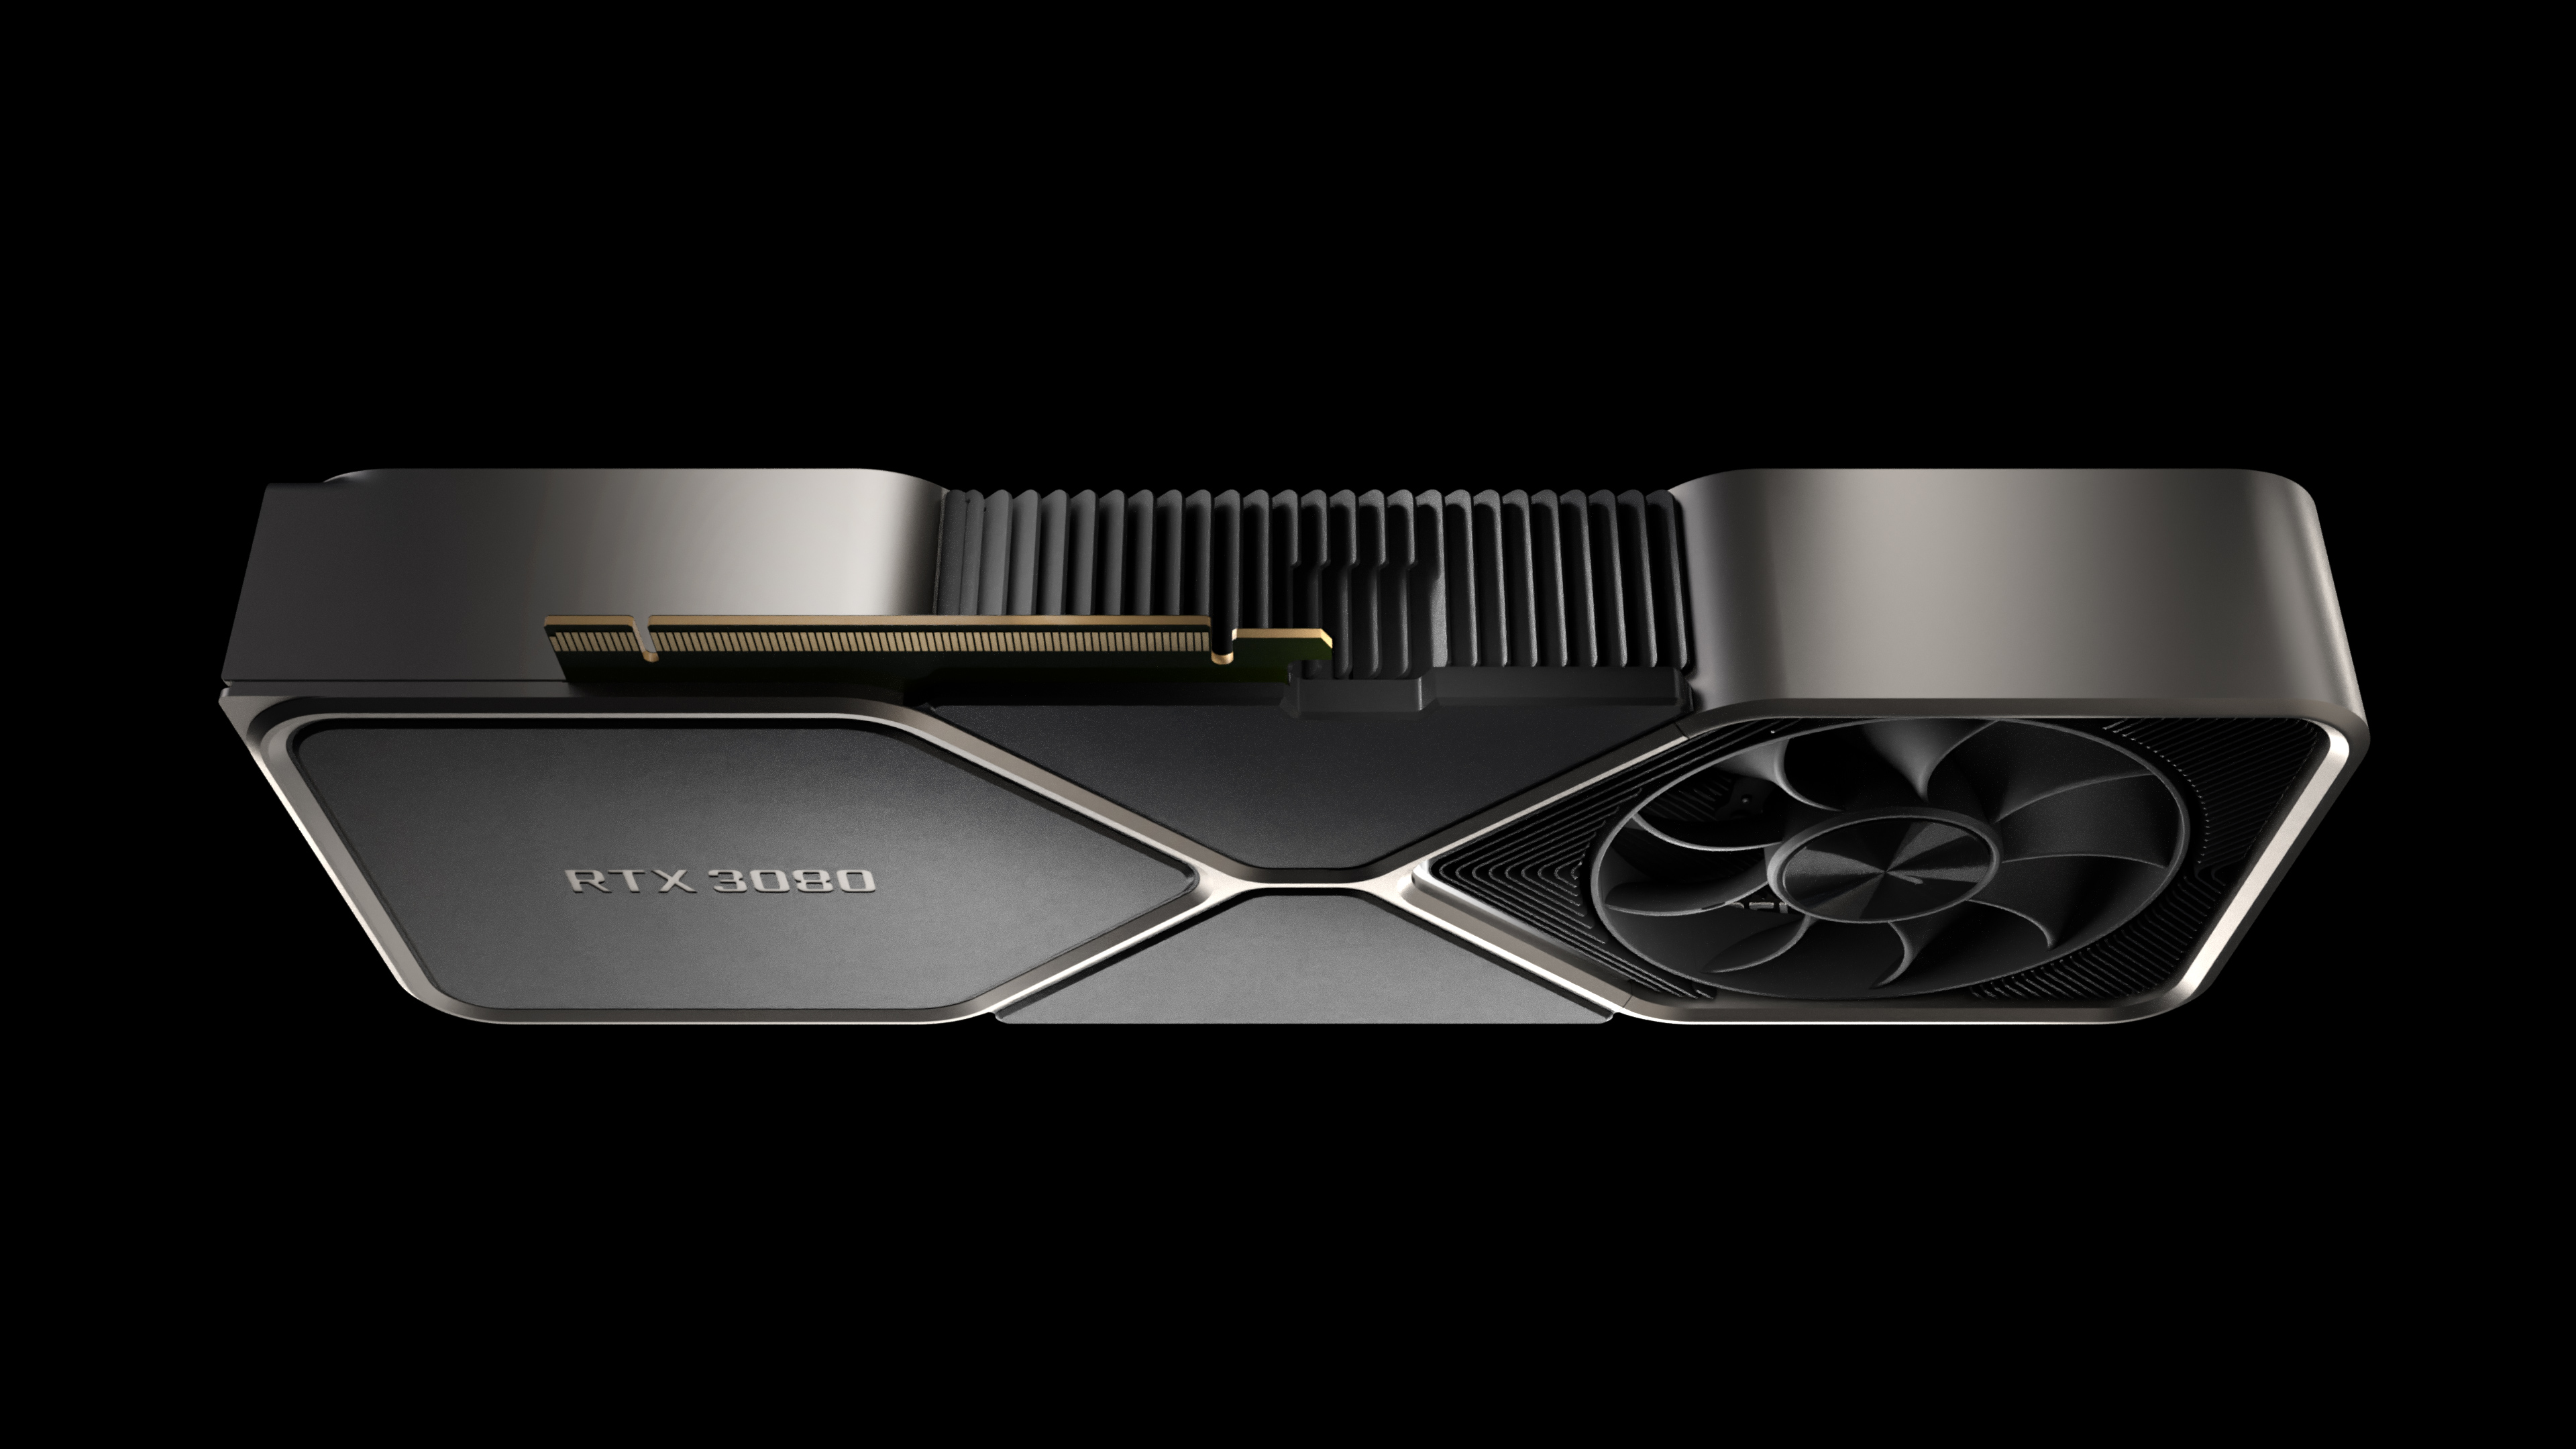 Nvidia Ampere's new flagship RTX 3080 